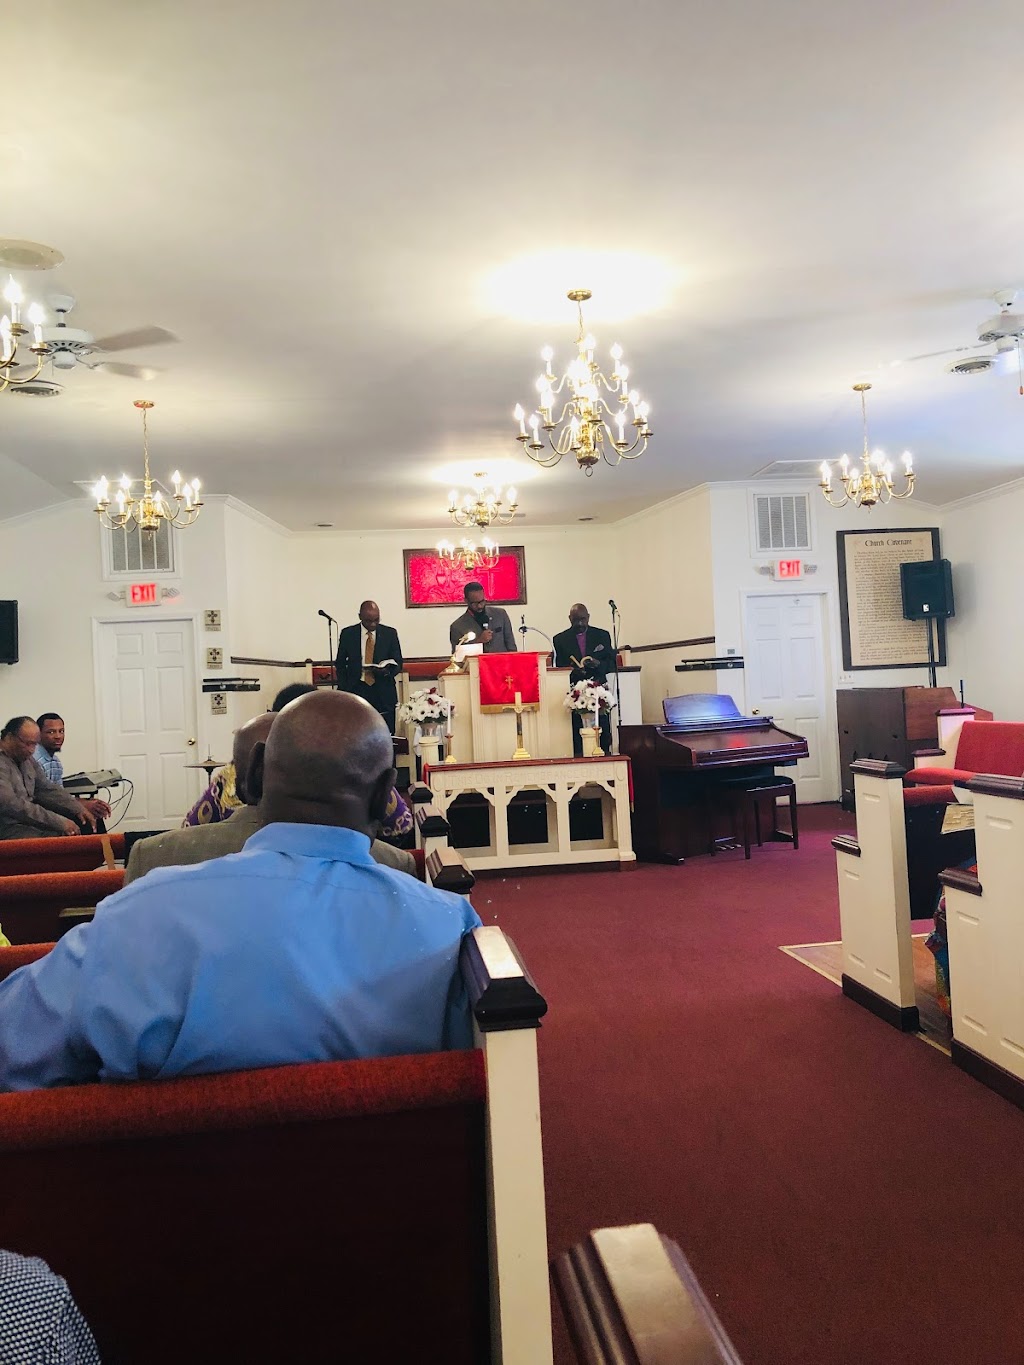 Raymond Hill Baptist Church | 1495 S Crestview Dr, Snellville, GA 30078, USA | Phone: (770) 985-6353